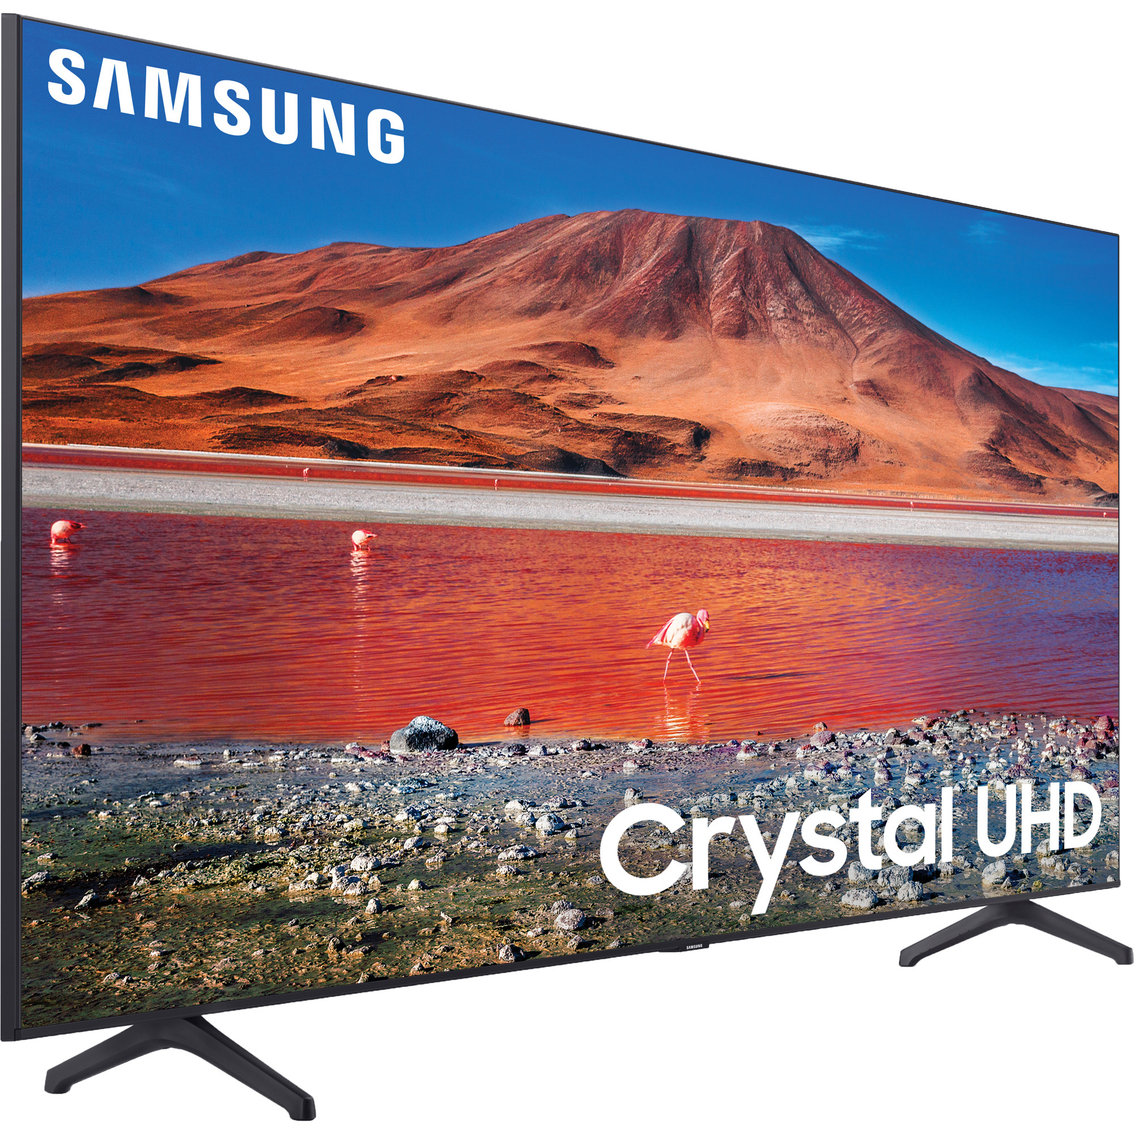 Samsung 75 in. Class TU7000 Crystal UHD 4K HDR Smart TV UN75TU7000FXZA - Image 2 of 7